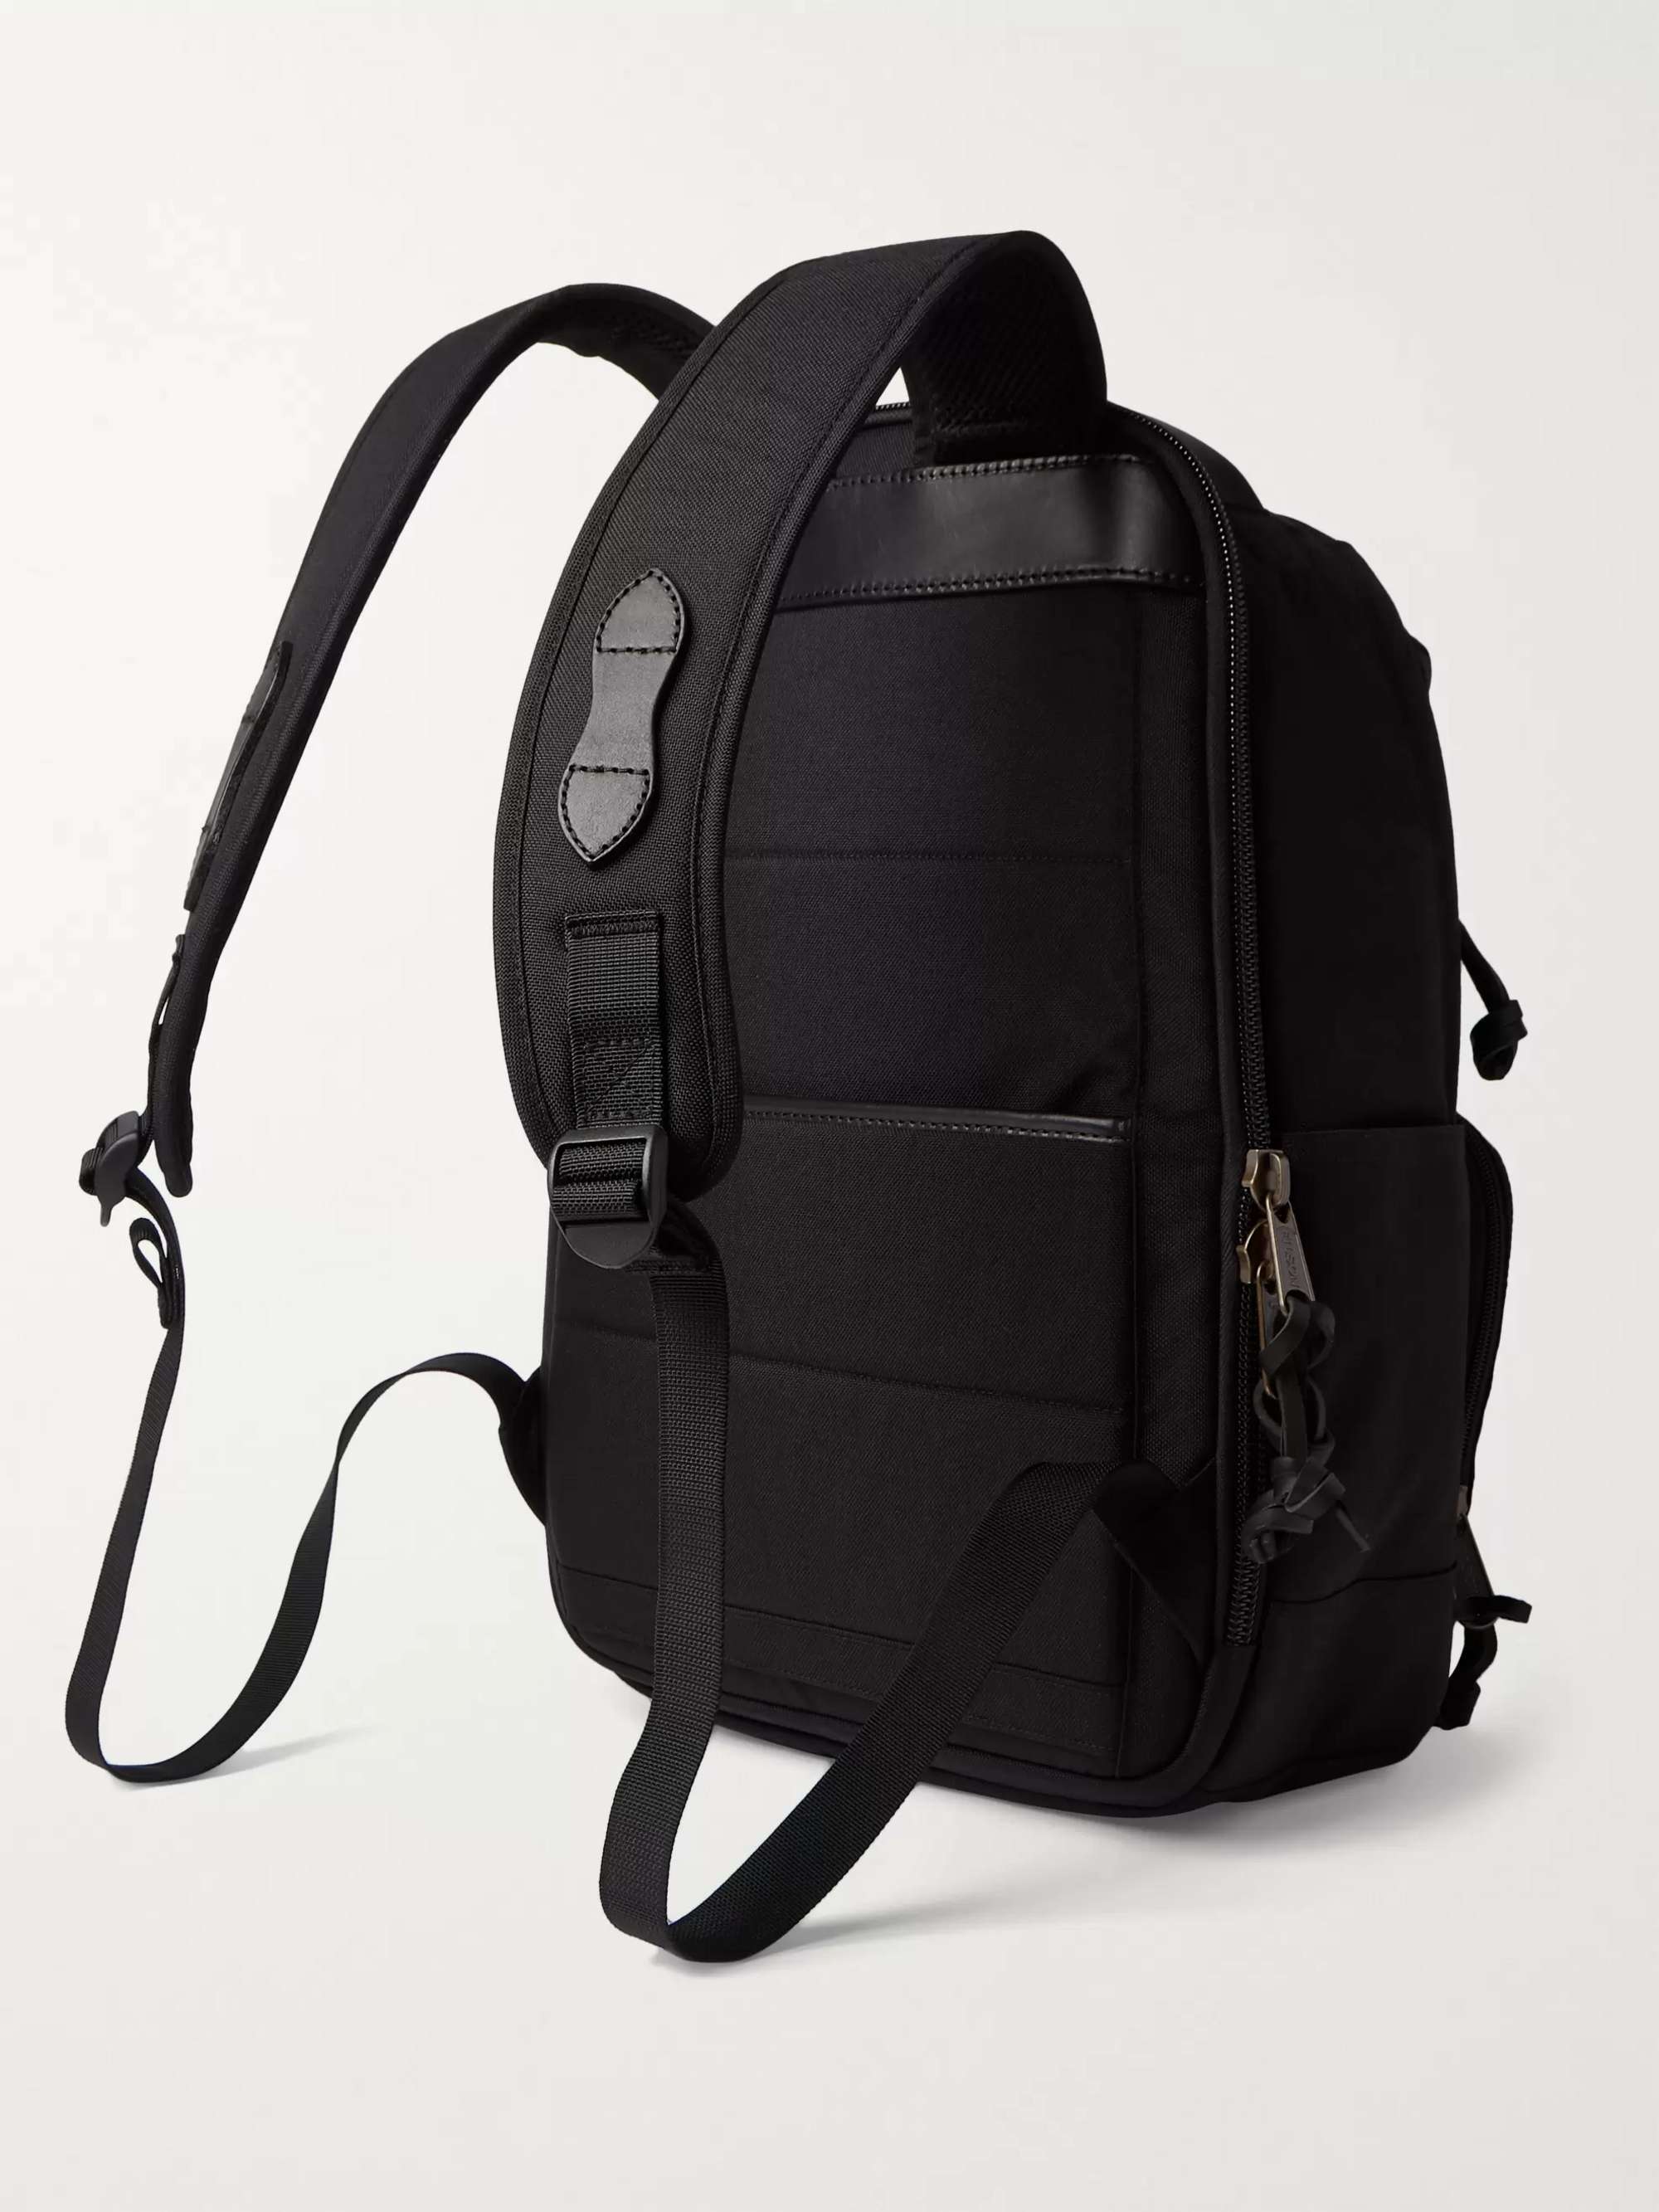 FILSON Dryden Leather-Trimmed CORDURA Backpack